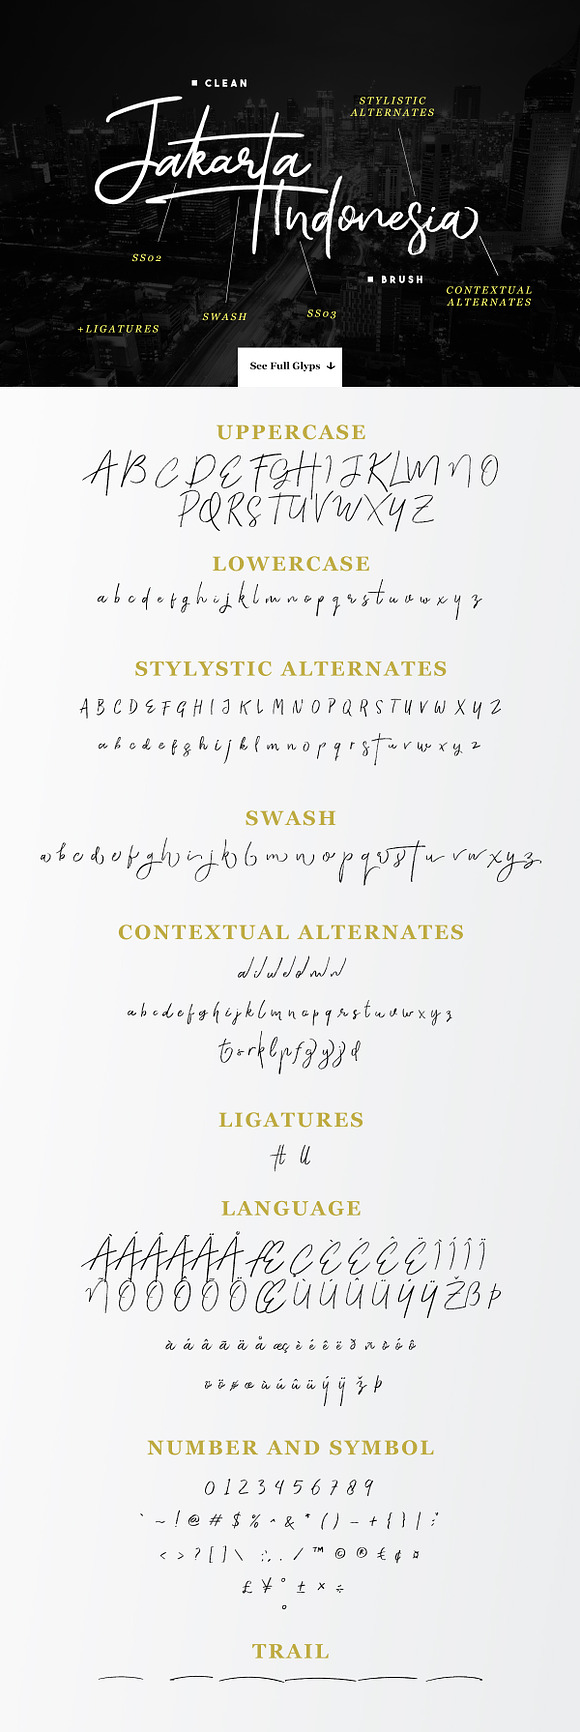 Gloriant Signature Script in Signature Fonts - product preview 2